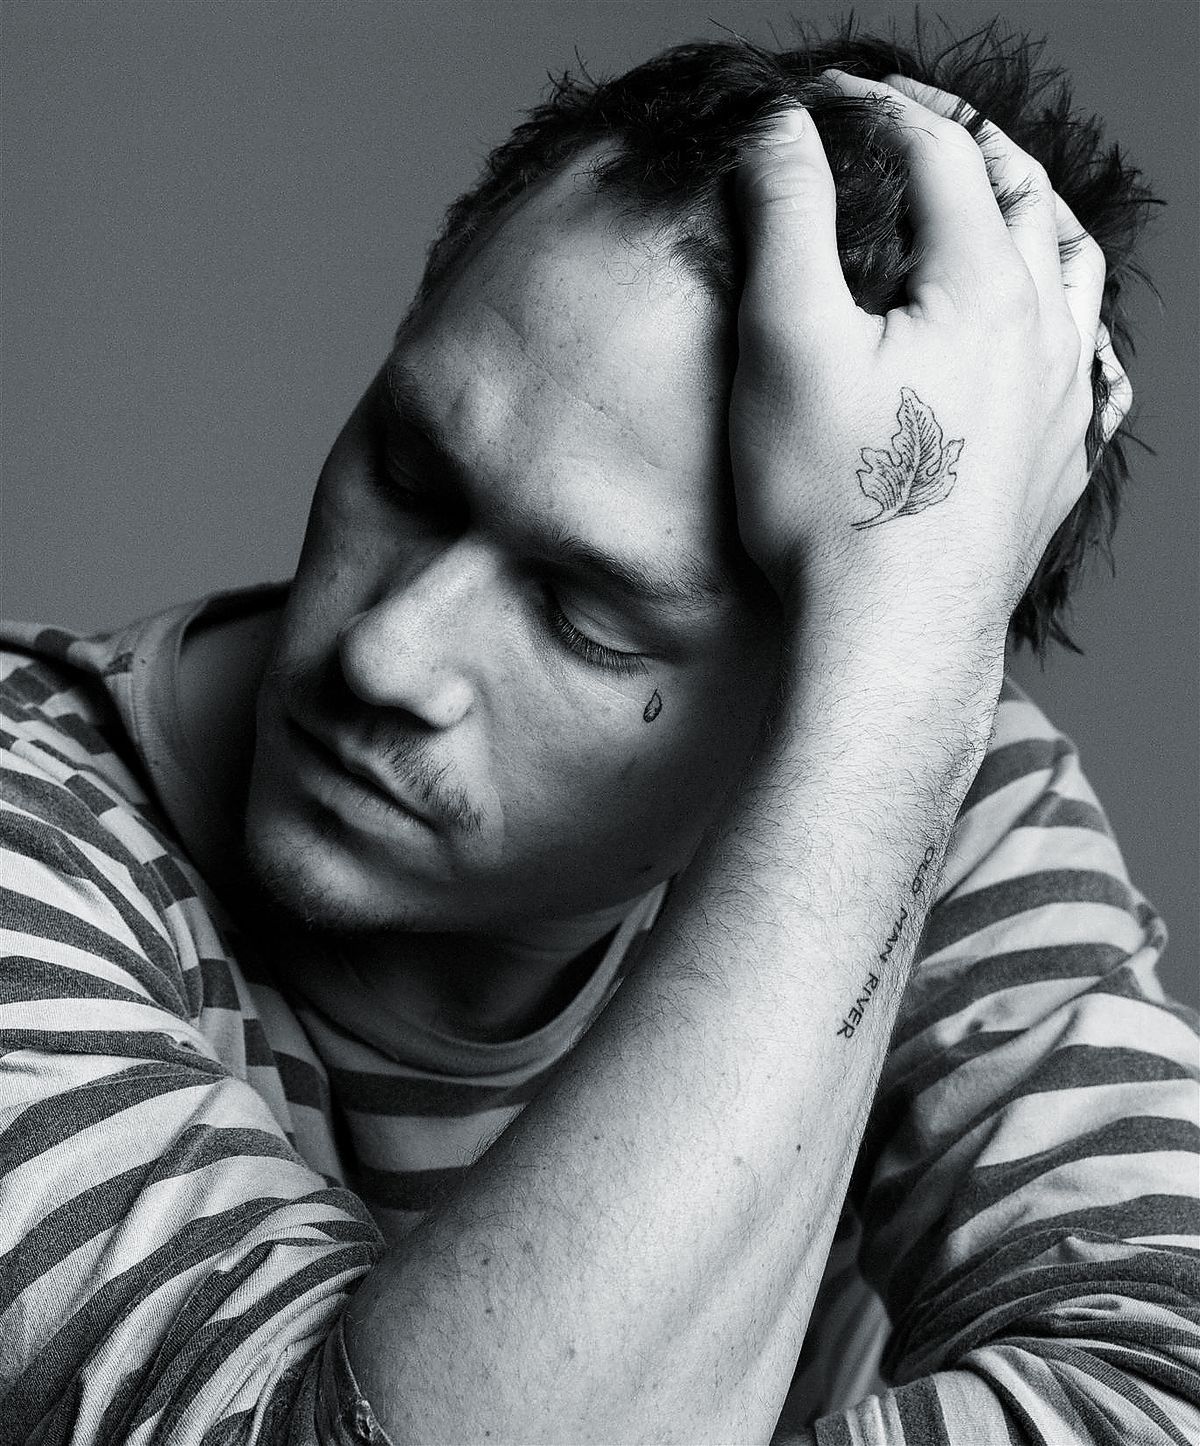 Хит Леджер (Heath Ledger), род. 1979-2008